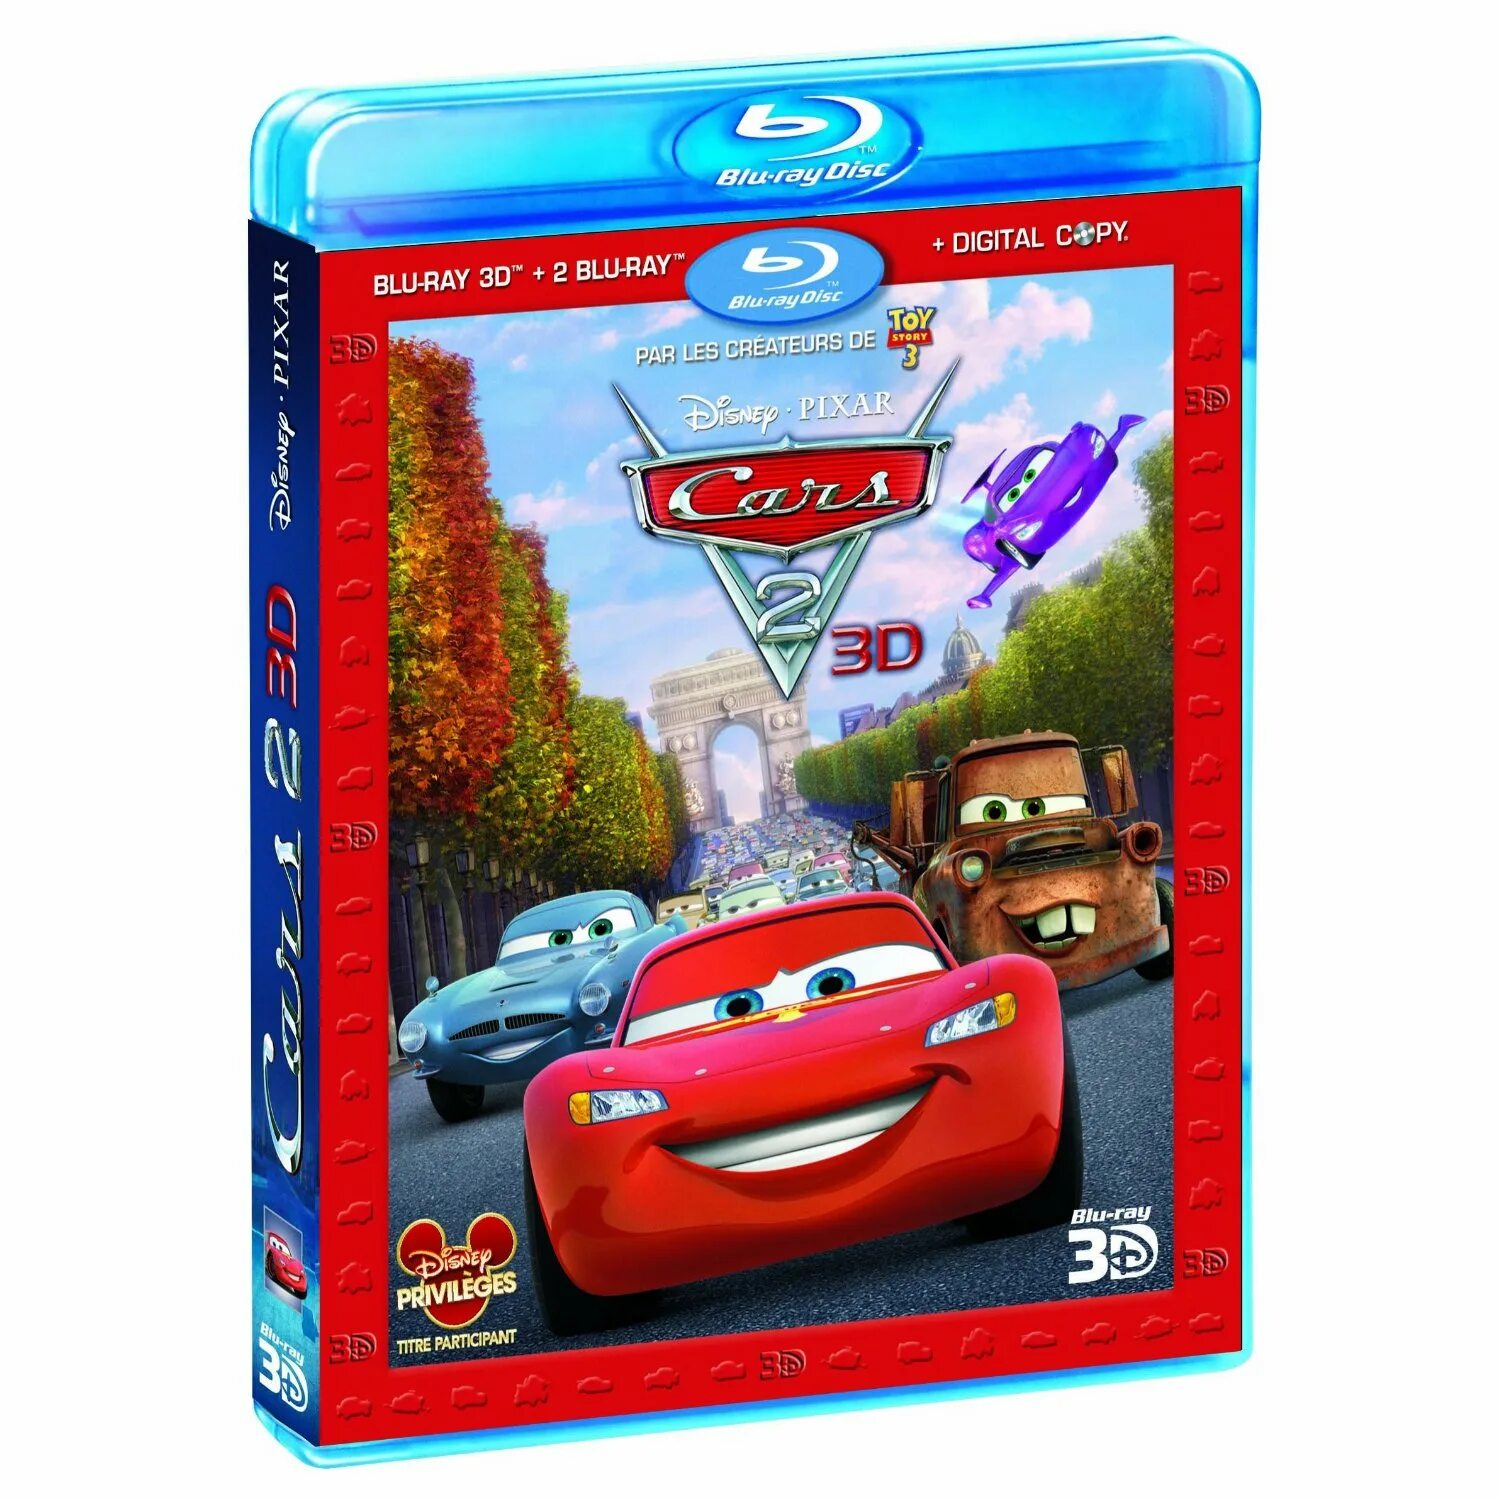 Cars 2 Blu ray. Cars 2 Blu ray Disc. Тачки Blu-ray. Диск Тачки 2006 Blu ray. Тачки меню